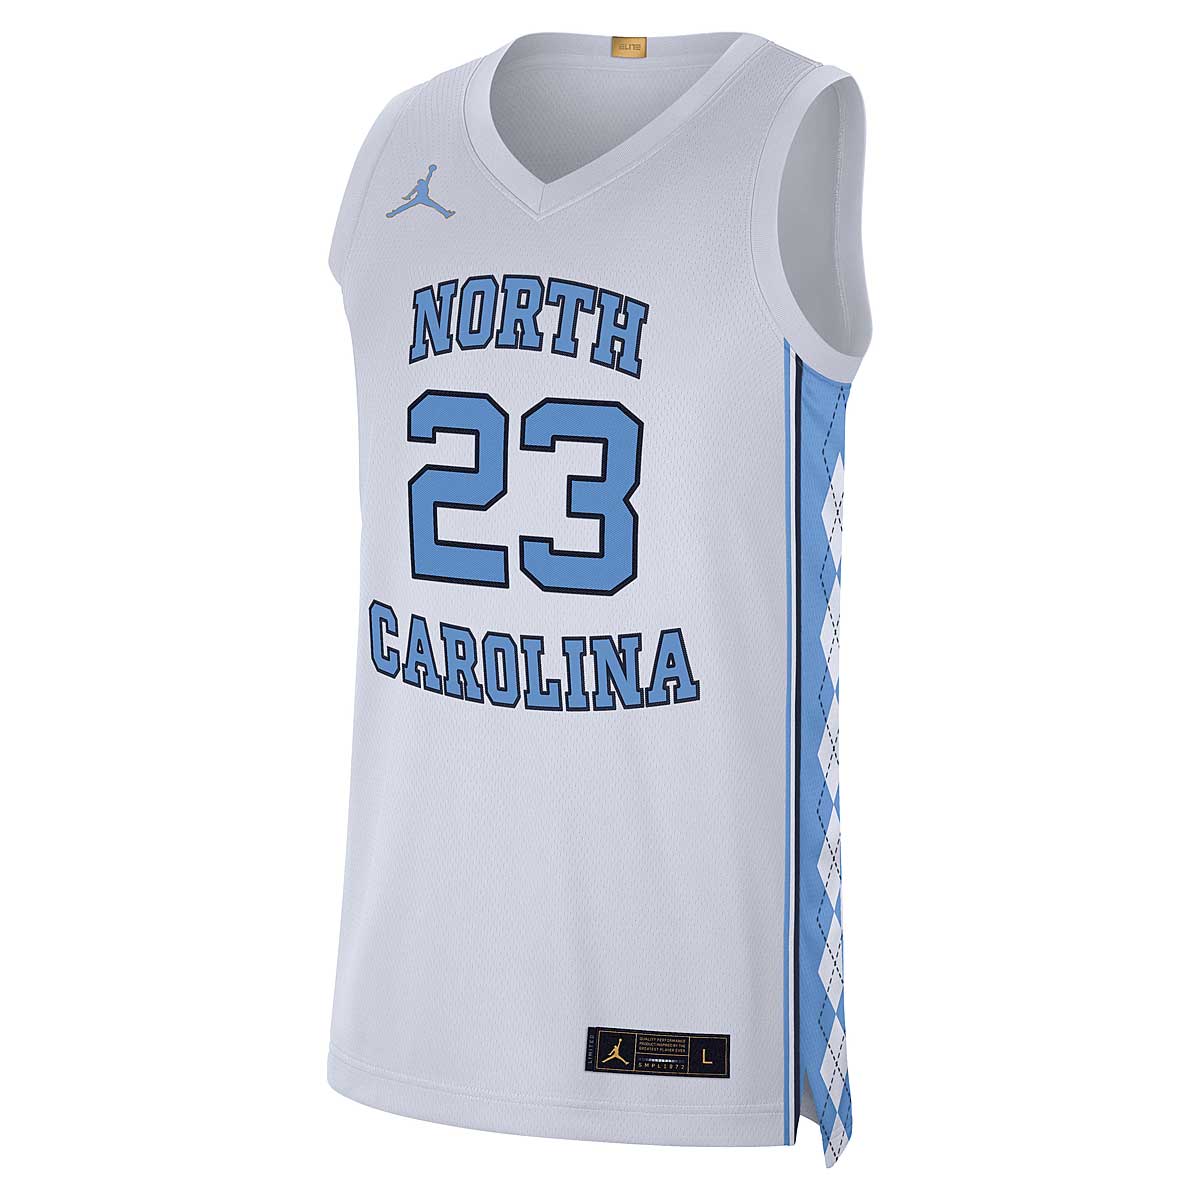 Image of Jordan Ncaa North Carolina Tarheels Limited Edition Jersey Michael Jordan, White/valor Blue